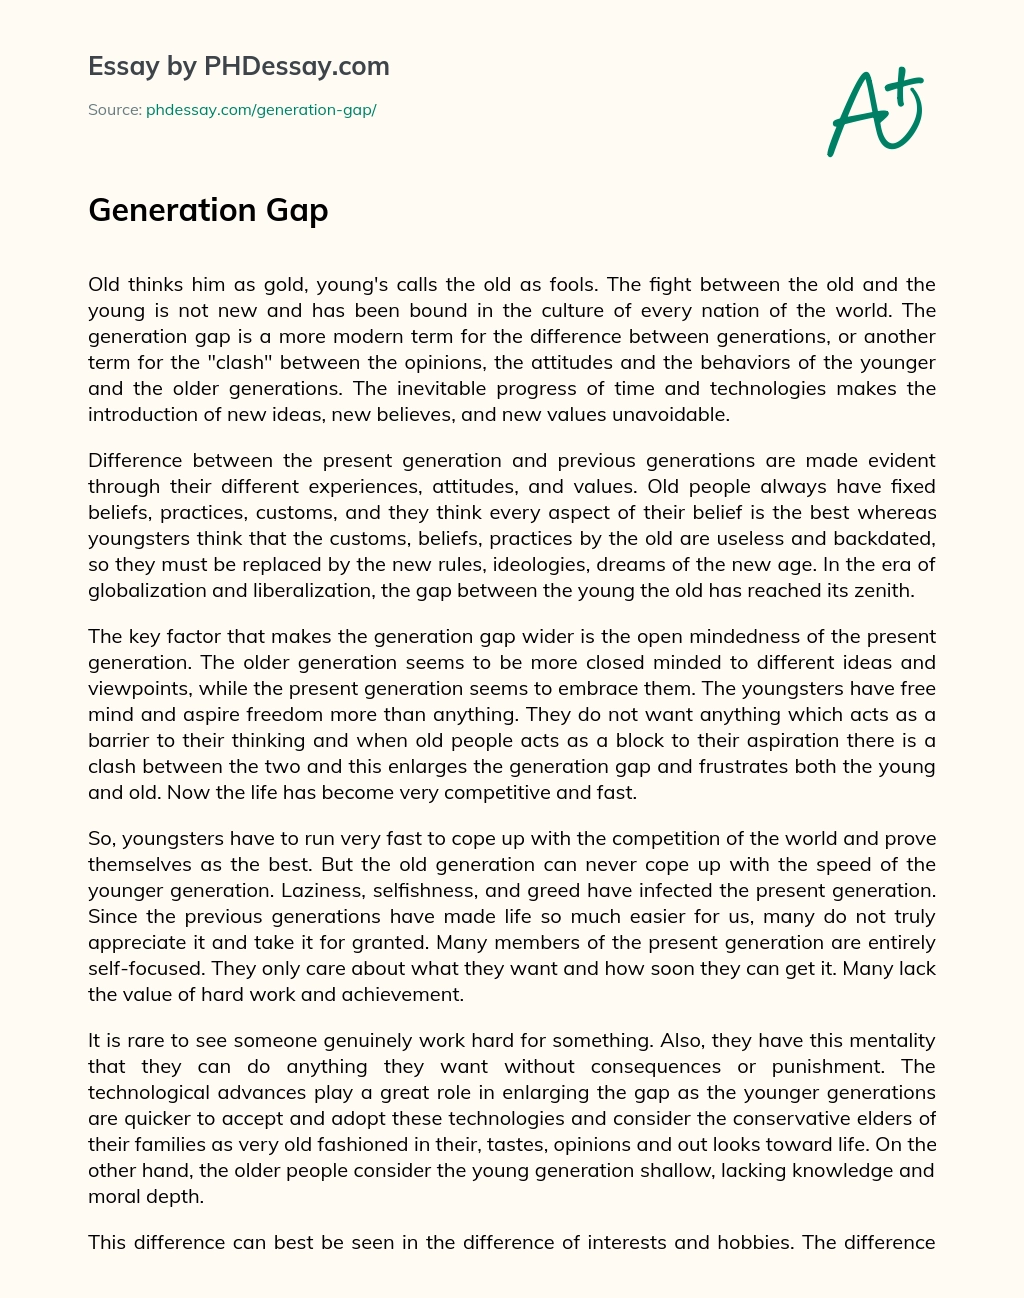 Generation Gap essay